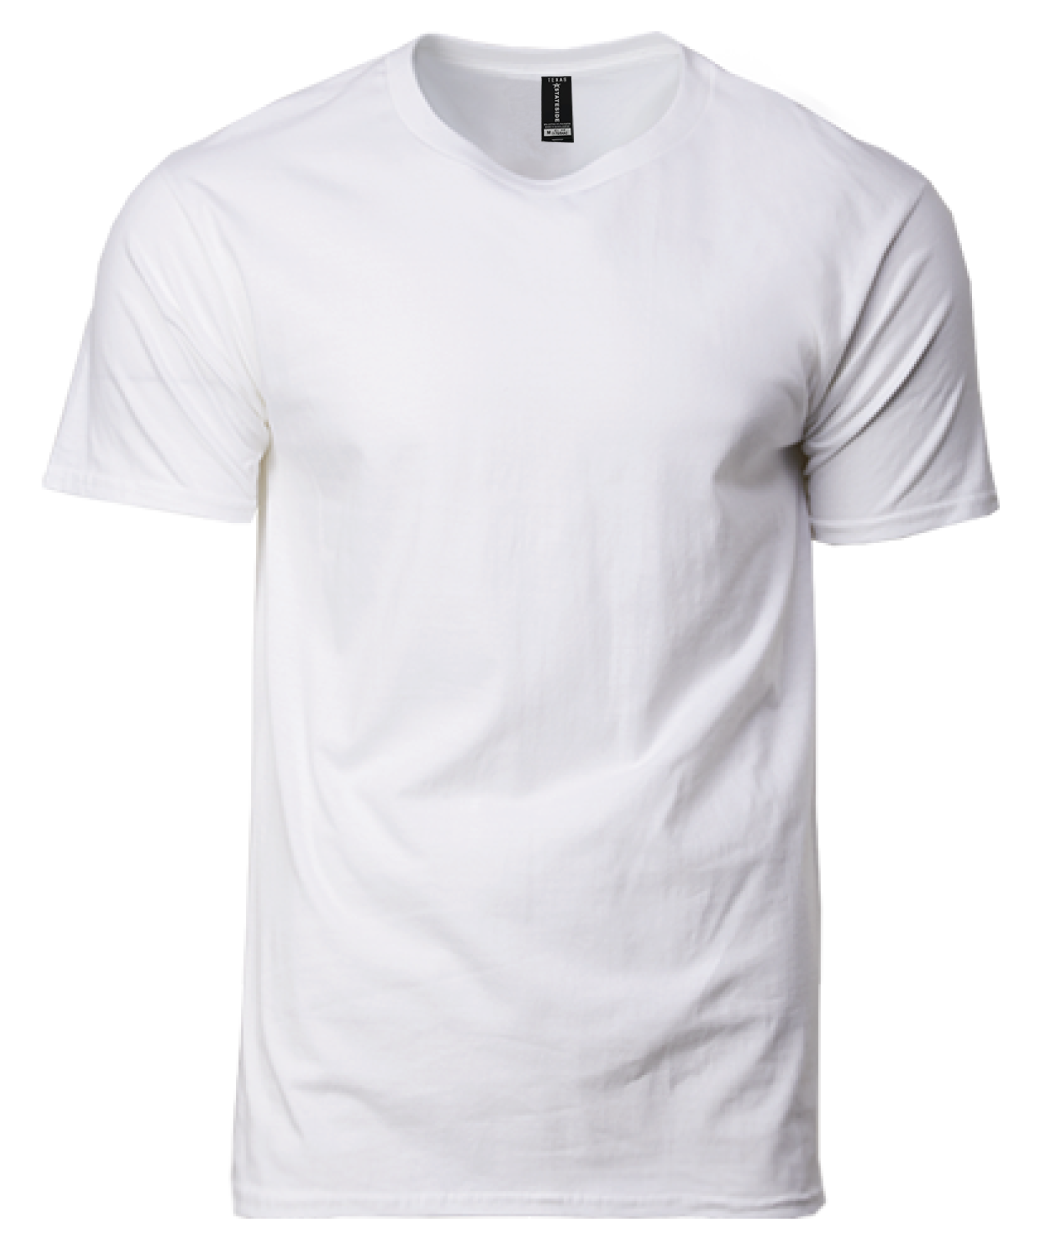 GILDAN X Stateside TEXAS 205GSM Cotton Unisex T-Shirt Best Men Women Plain Round Neck Cotton T-Shirt BLACK/WHITE/NAVY/RED/RPYAL/DAISY/SPORT GREY